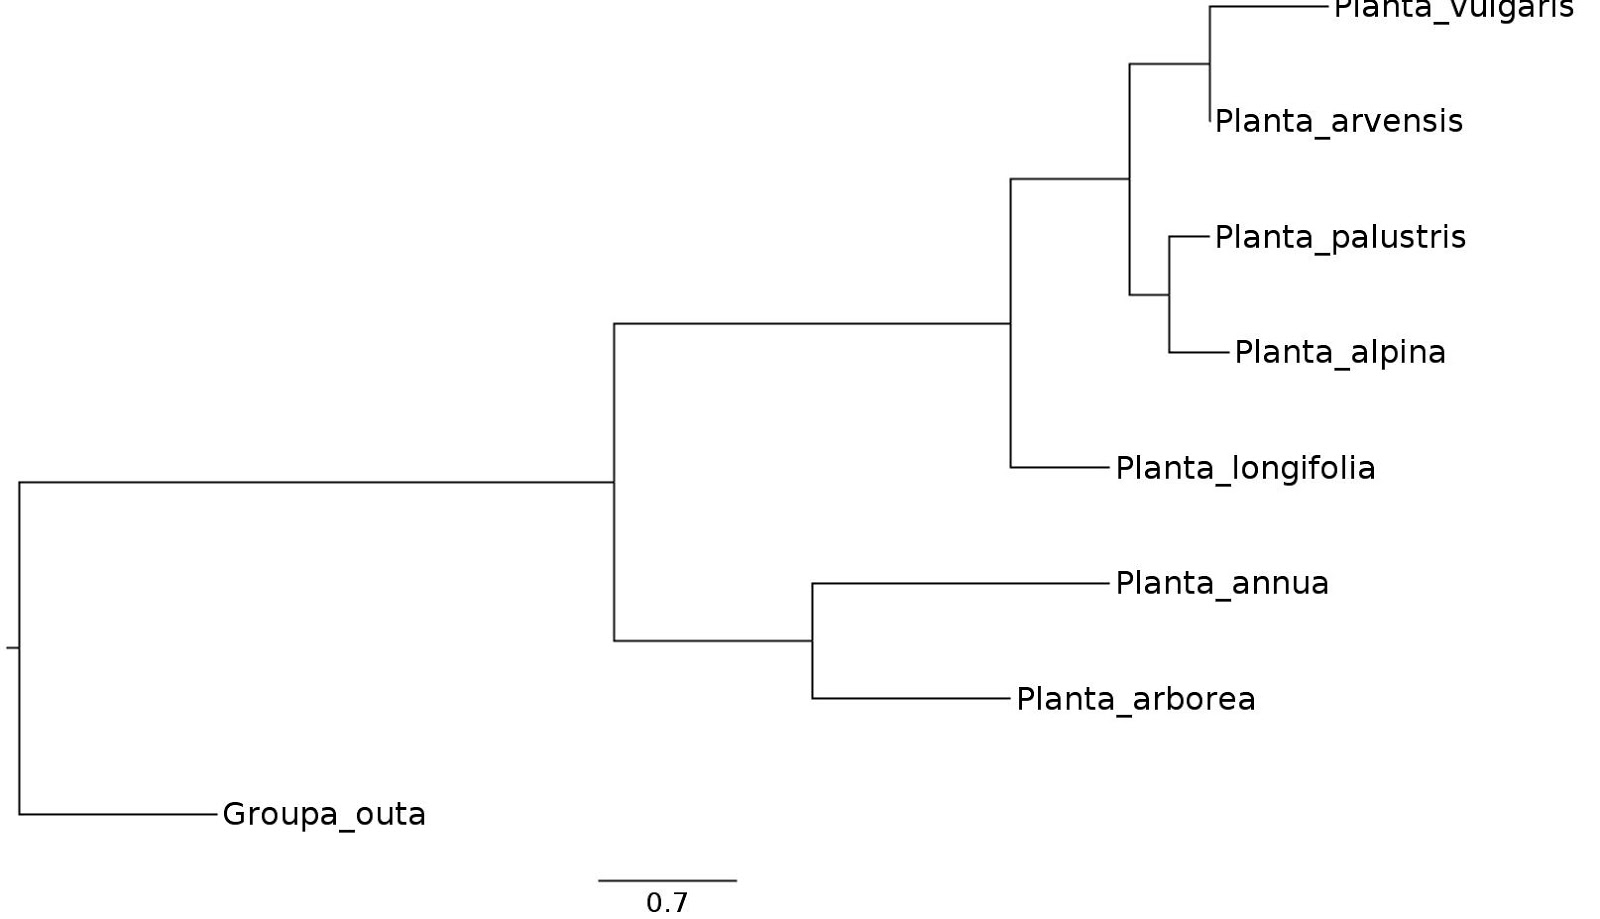 Phylogenetic Tree Template